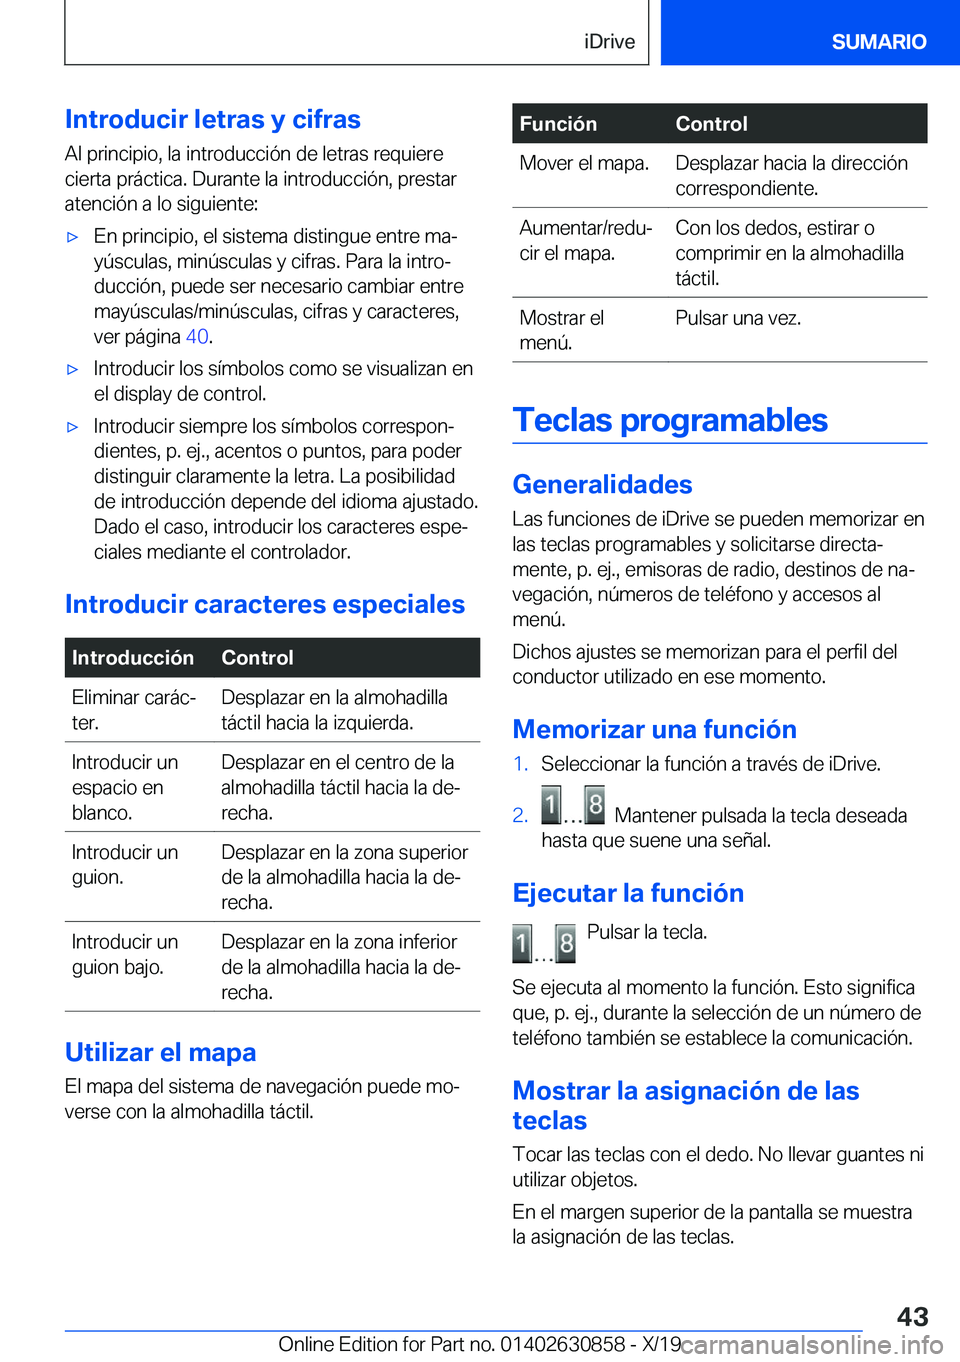 BMW 4 SERIES GRAN COUPE 2020  Manuales de Empleo (in Spanish) �I�n�t�r�o�d�u�c�i�r��l�e�t�r�a�s��y��c�i�f�r�a�s�A�l��p�r�i�n�c�i�p�i�o�,��l�a��i�n�t�r�o�d�u�c�c�i�